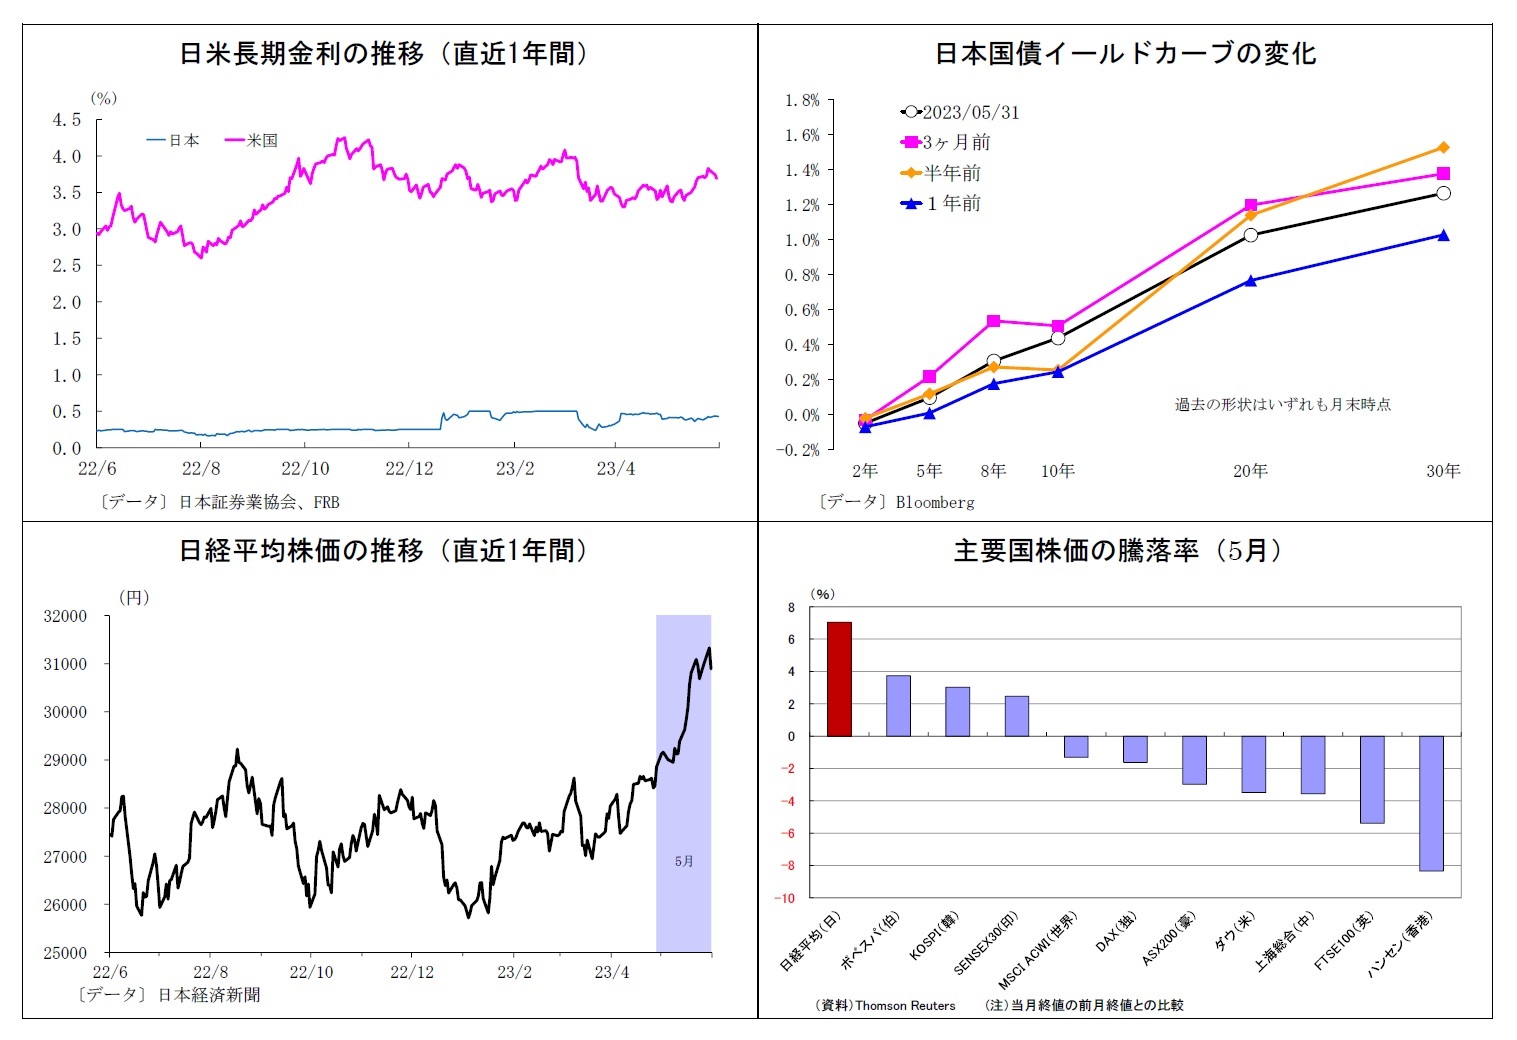 日米長期金利の推移（直近1年間）/日本国債イールドカーブの変化/日経平均株価の推移（直近1年間）/主要国株価の騰落率（5月）